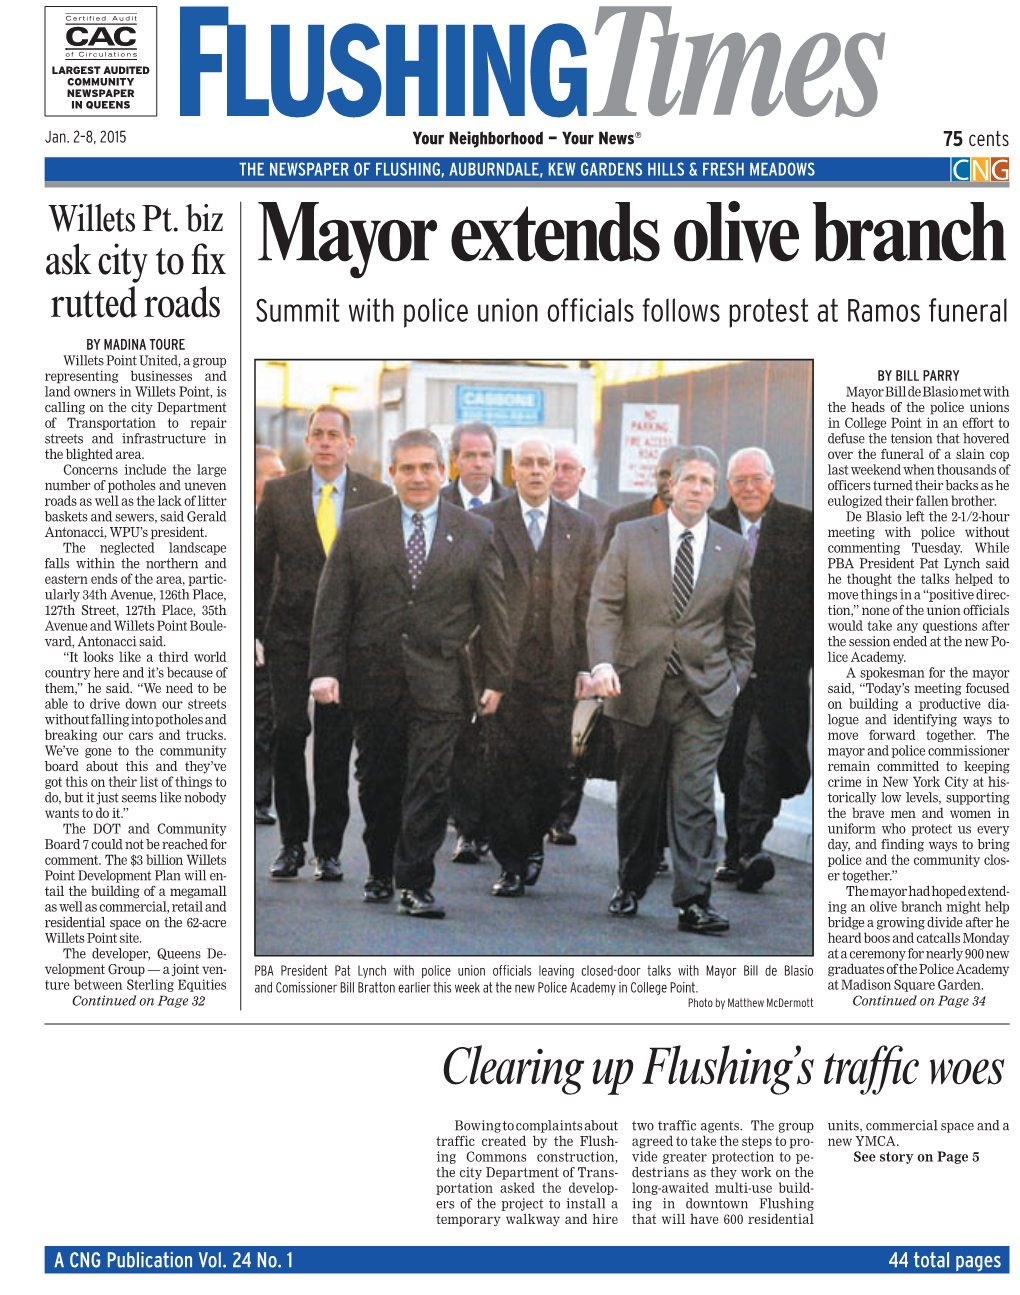 Mayor Extends Olive Branch